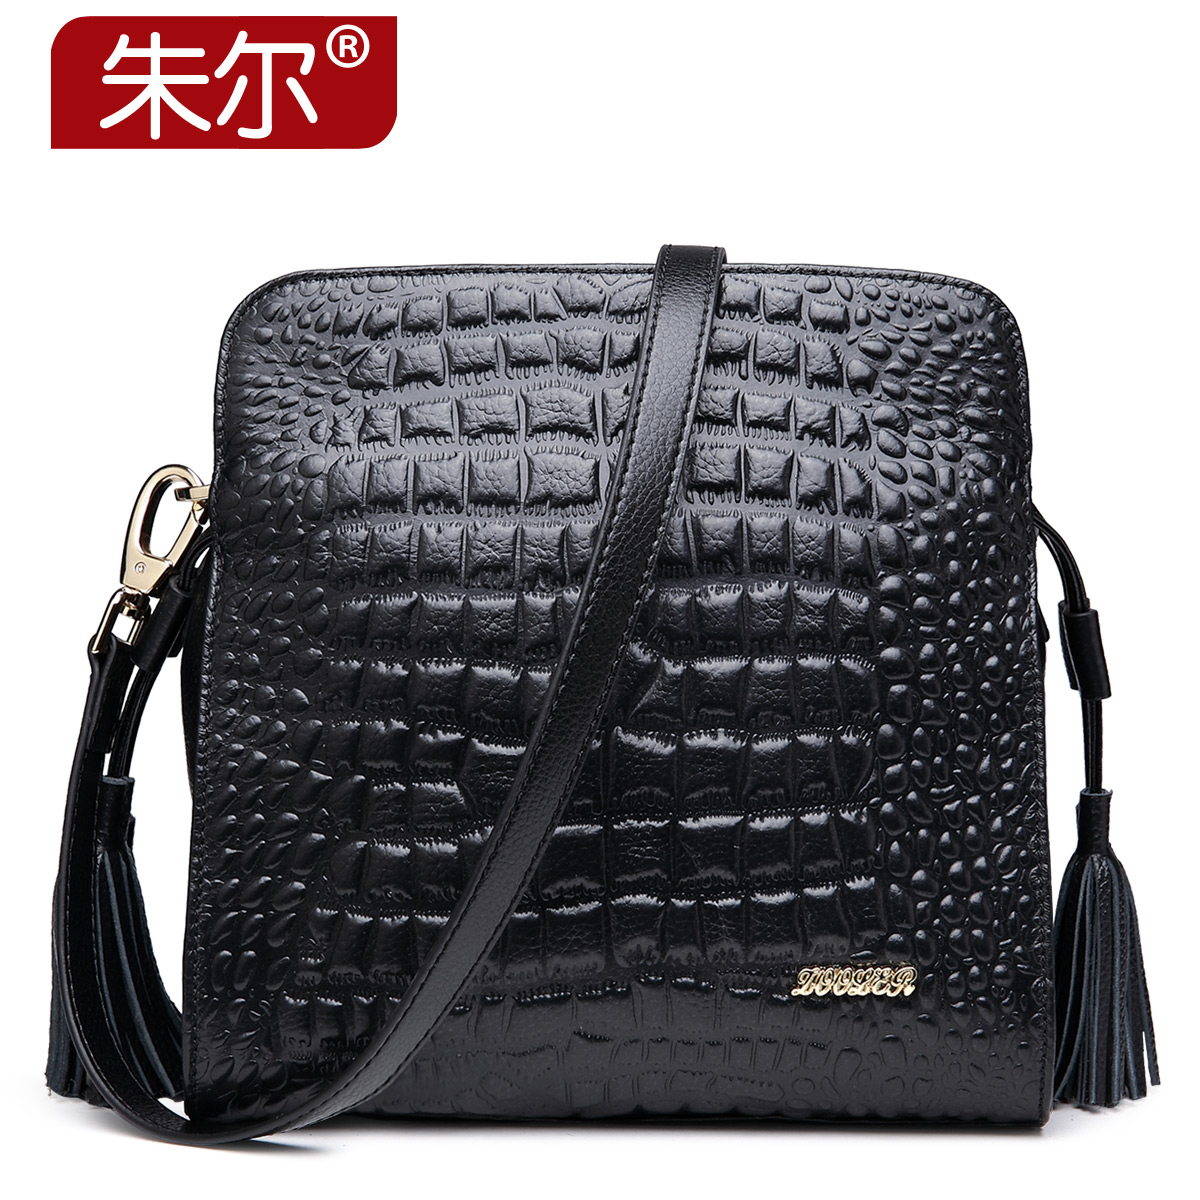 For Crocodile women's genuine leather handbag fashion all-match women shoulder bag cross-body female bag